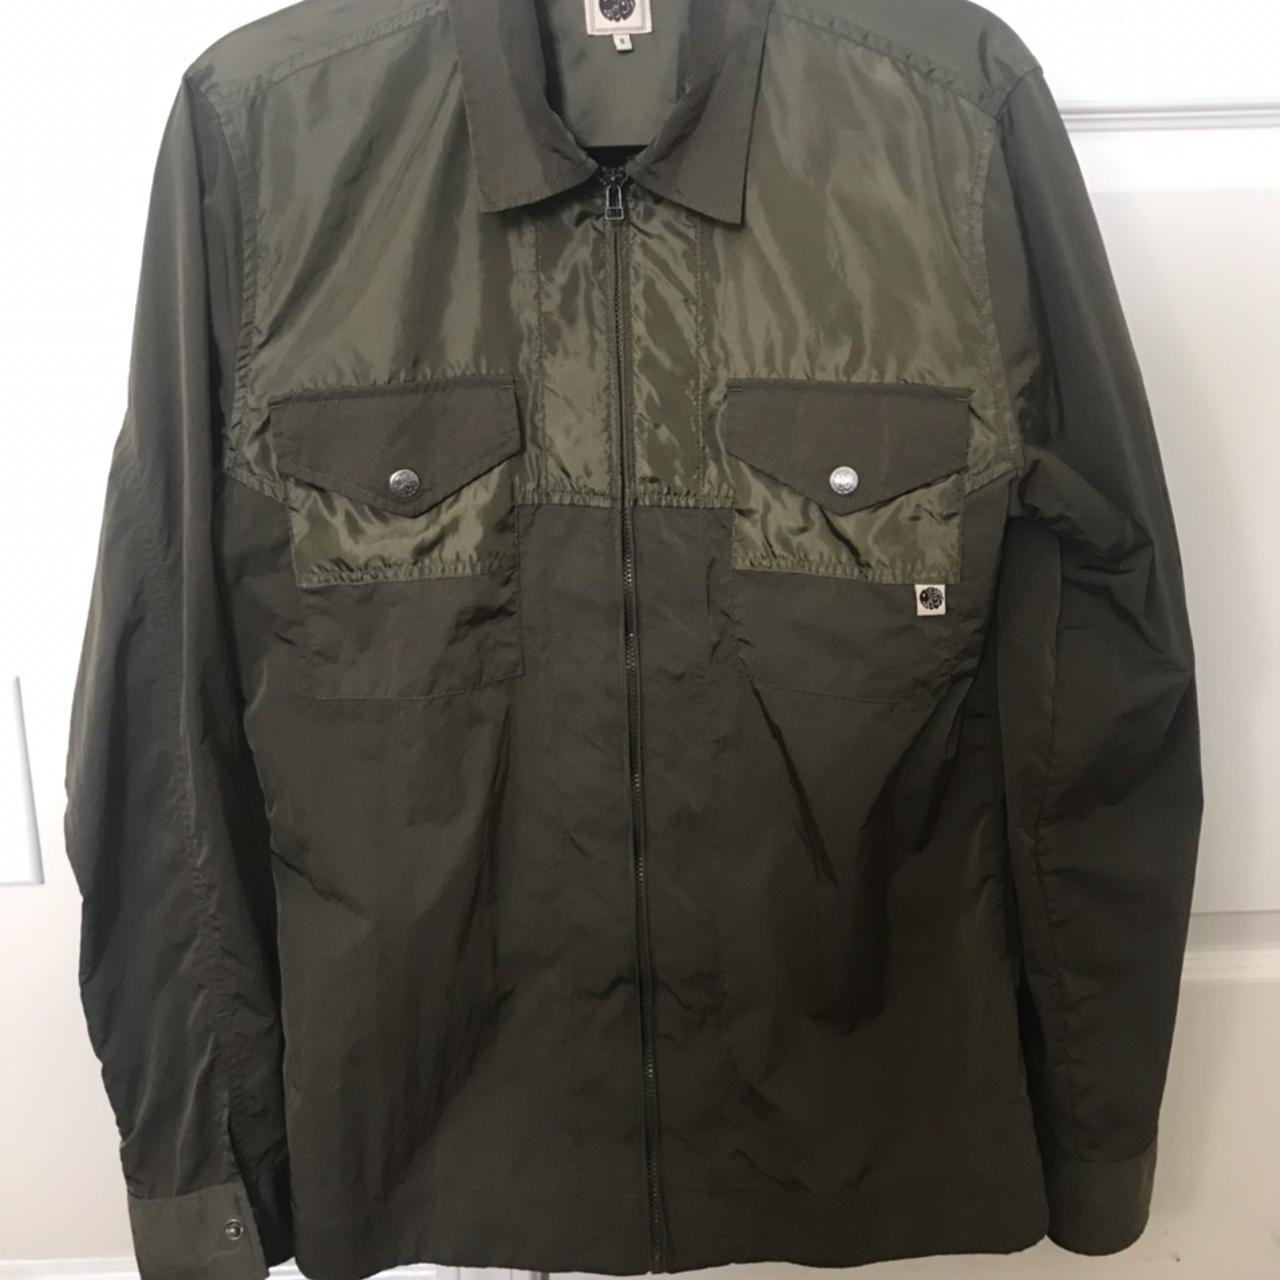 Product Image 1 - Pretty Green khaki jacket size